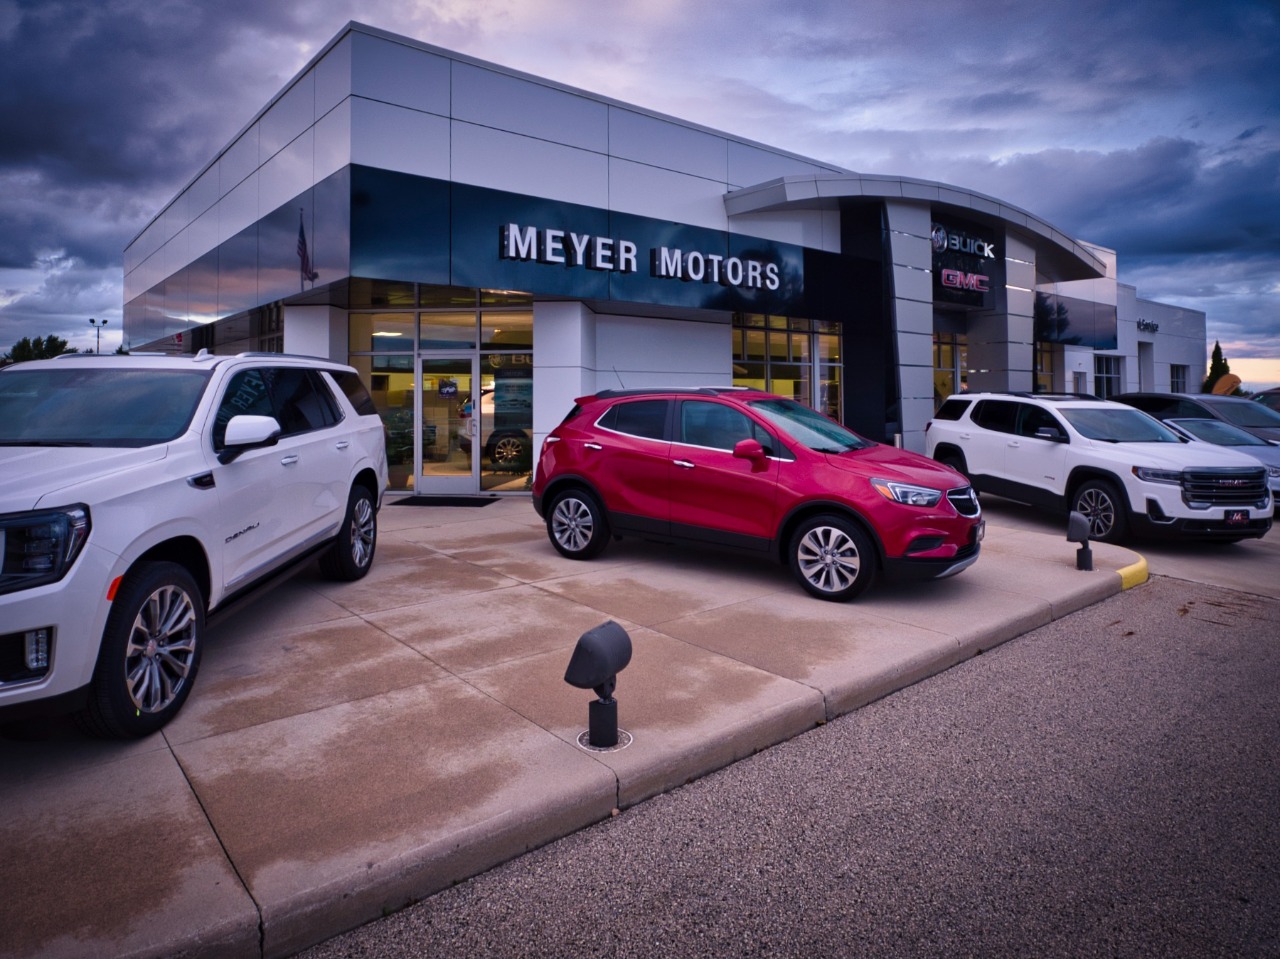 Meyer Motors, Inc.